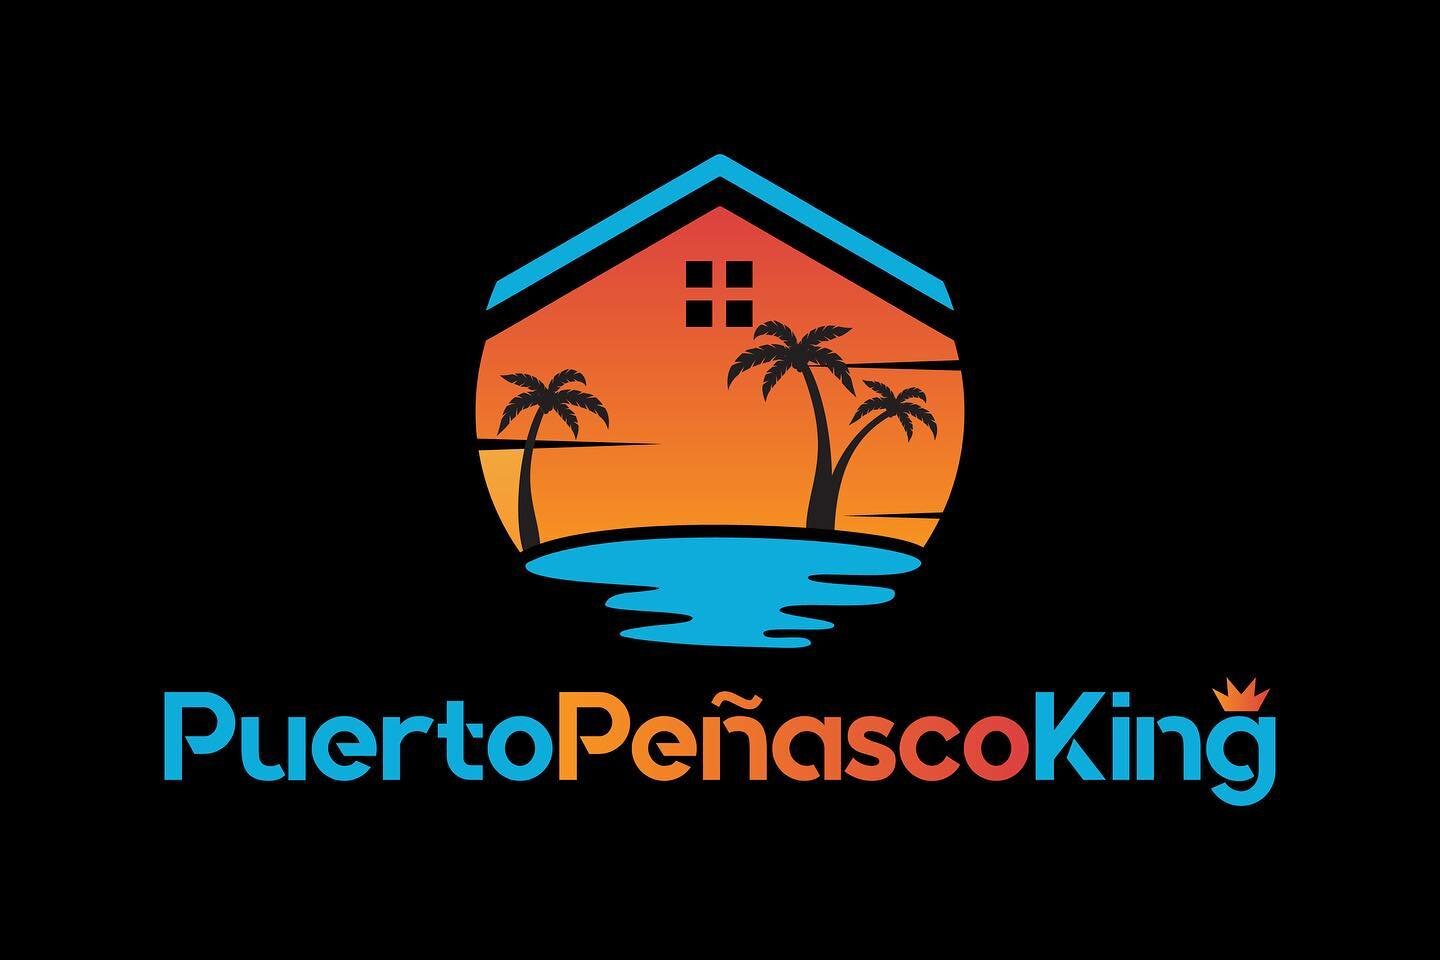 The logo @puertopenascoking